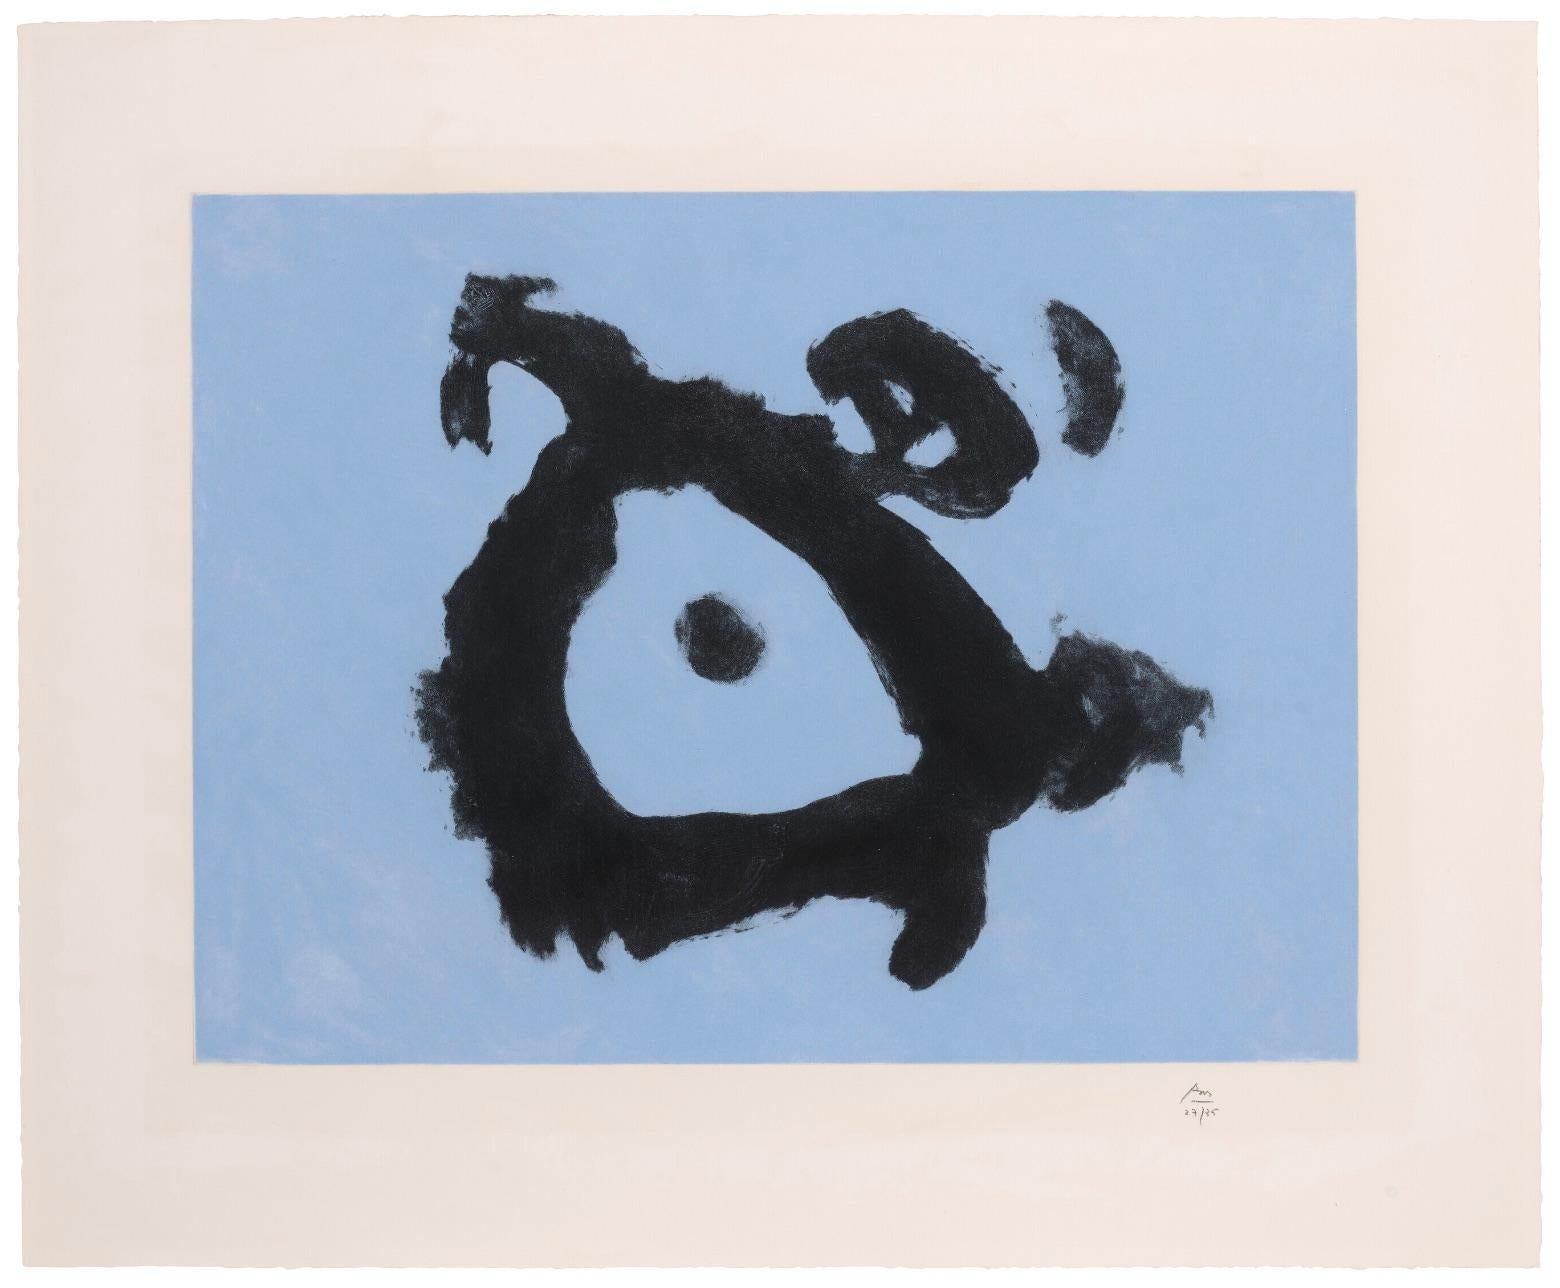 Abstract Print Robert Motherwell - L'œil du poète